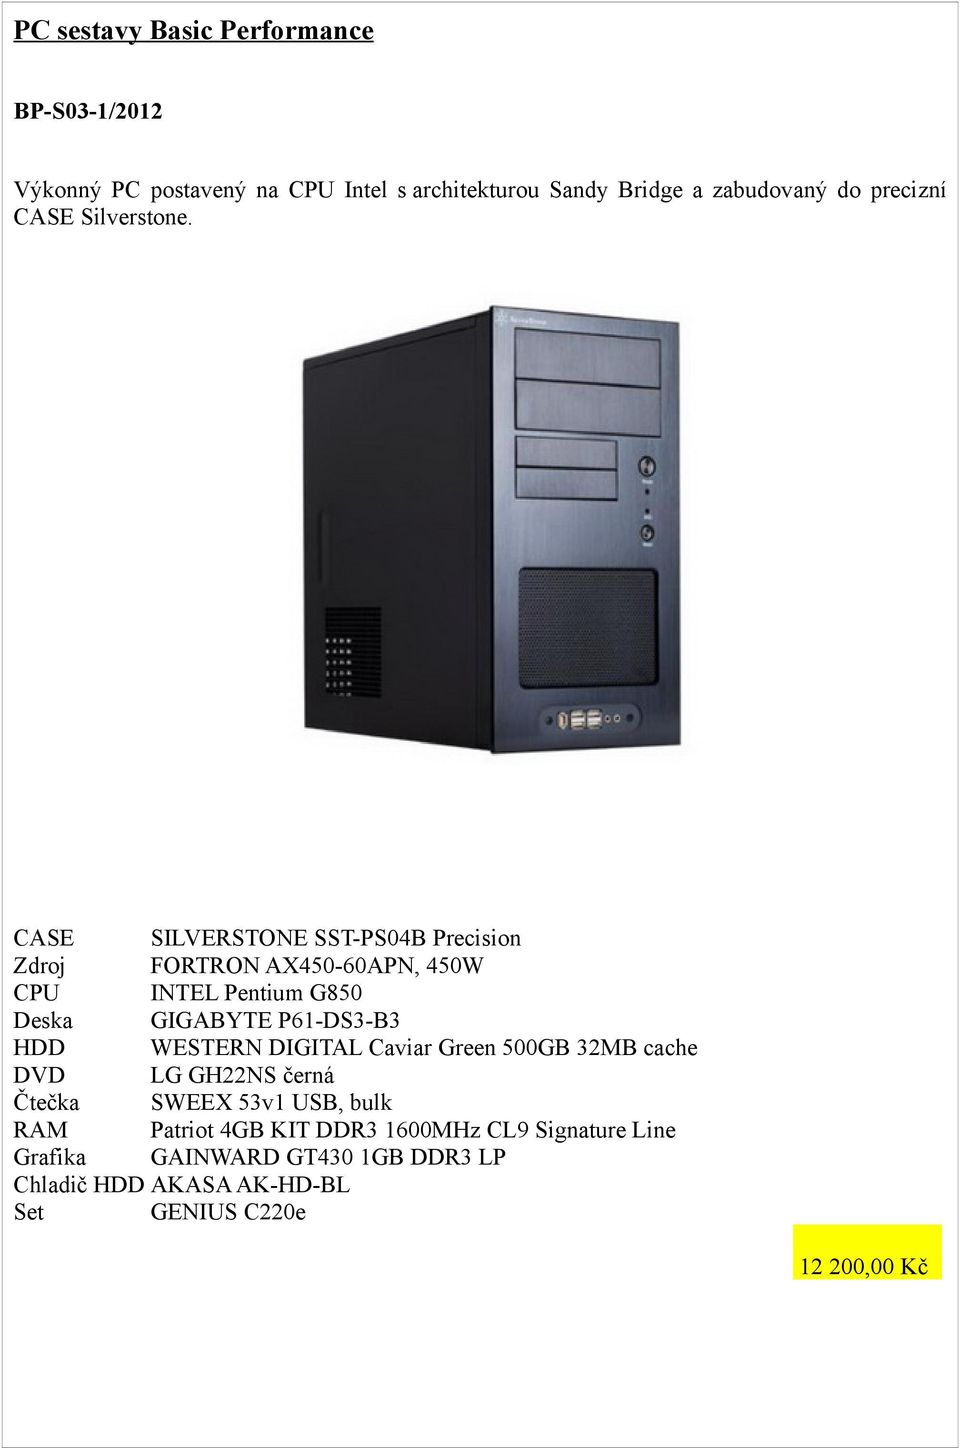 SILVERSTONE SST-PS04B Precision FORTRON AX450-60APN, 450W INTEL Pentium G850 GIGABYTE P61-DS3-B3 HDD